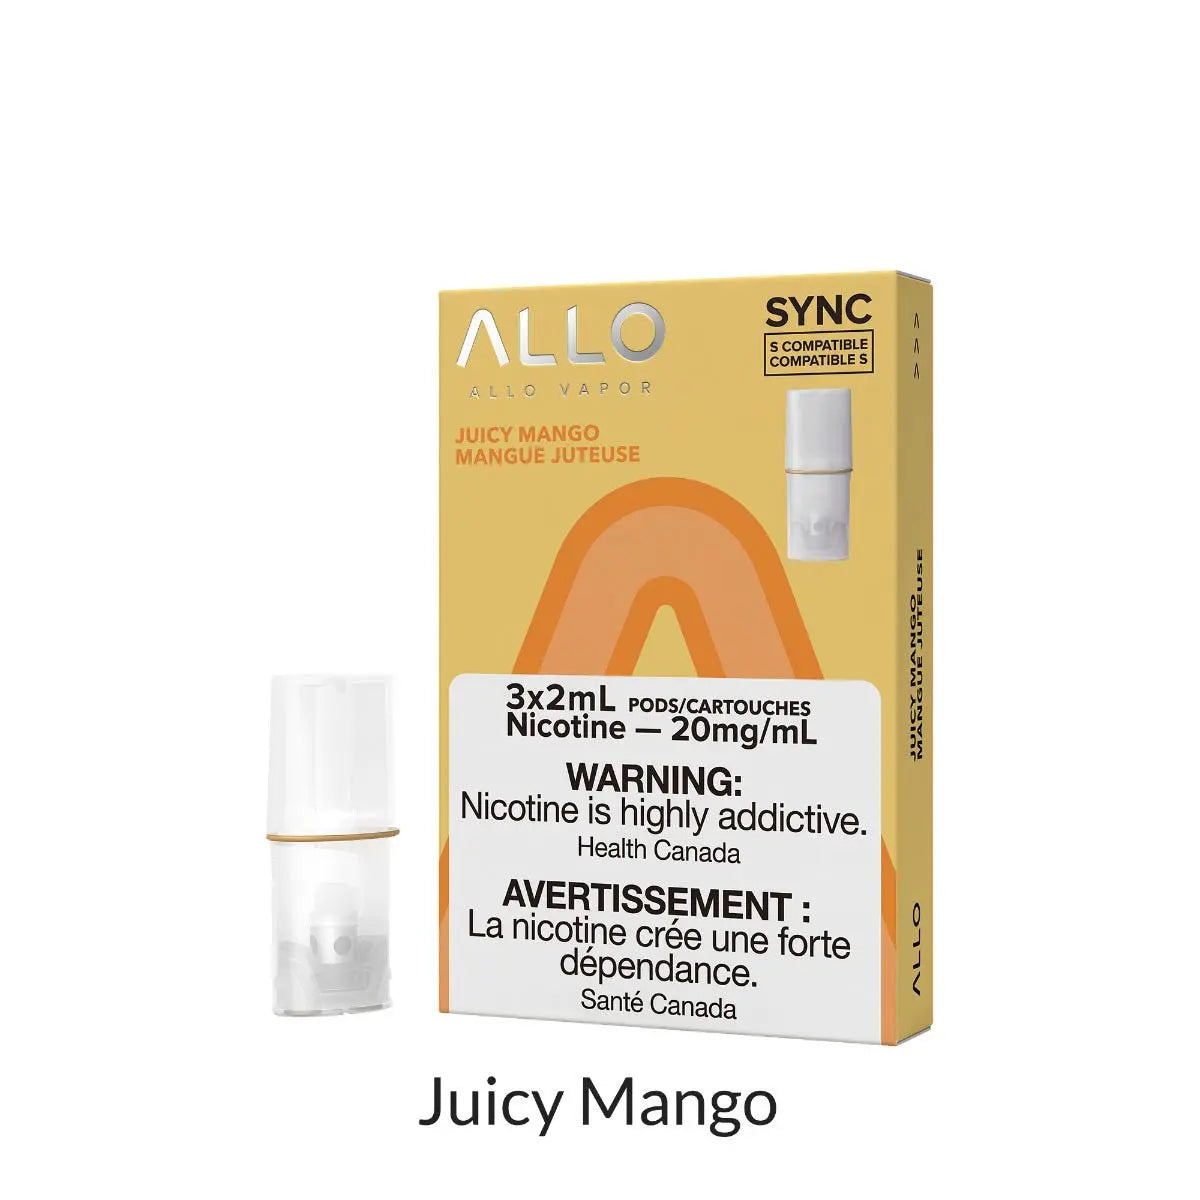 Allo Sync pods Juicy Mango (3x2ml)